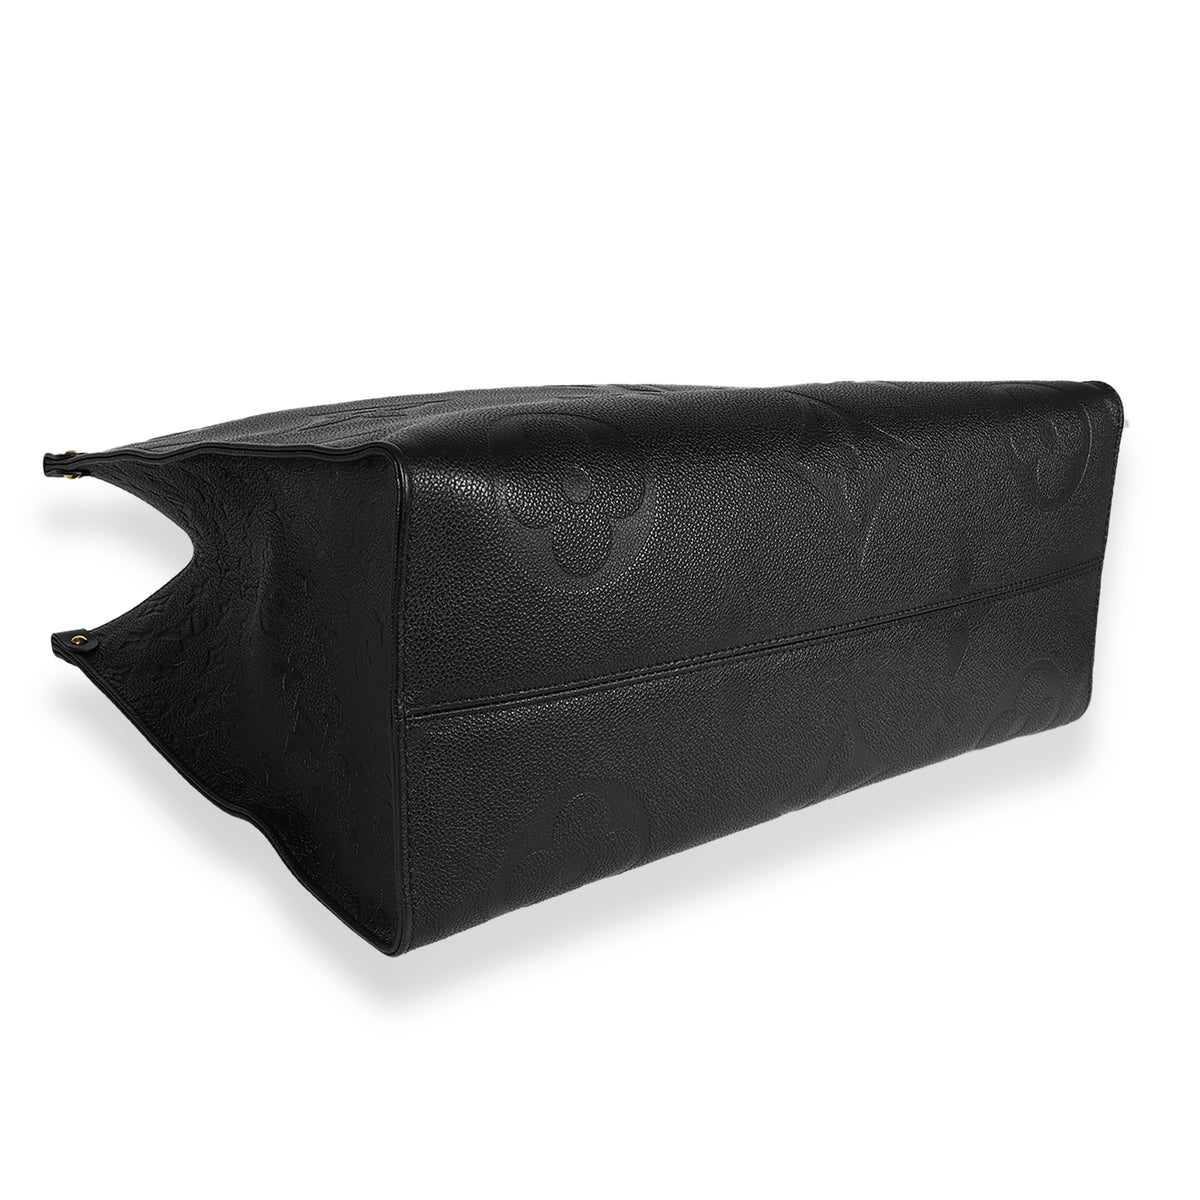 Louis Vuitton Black Monogram Empreinte Onthego GM Bag $3500+TAX